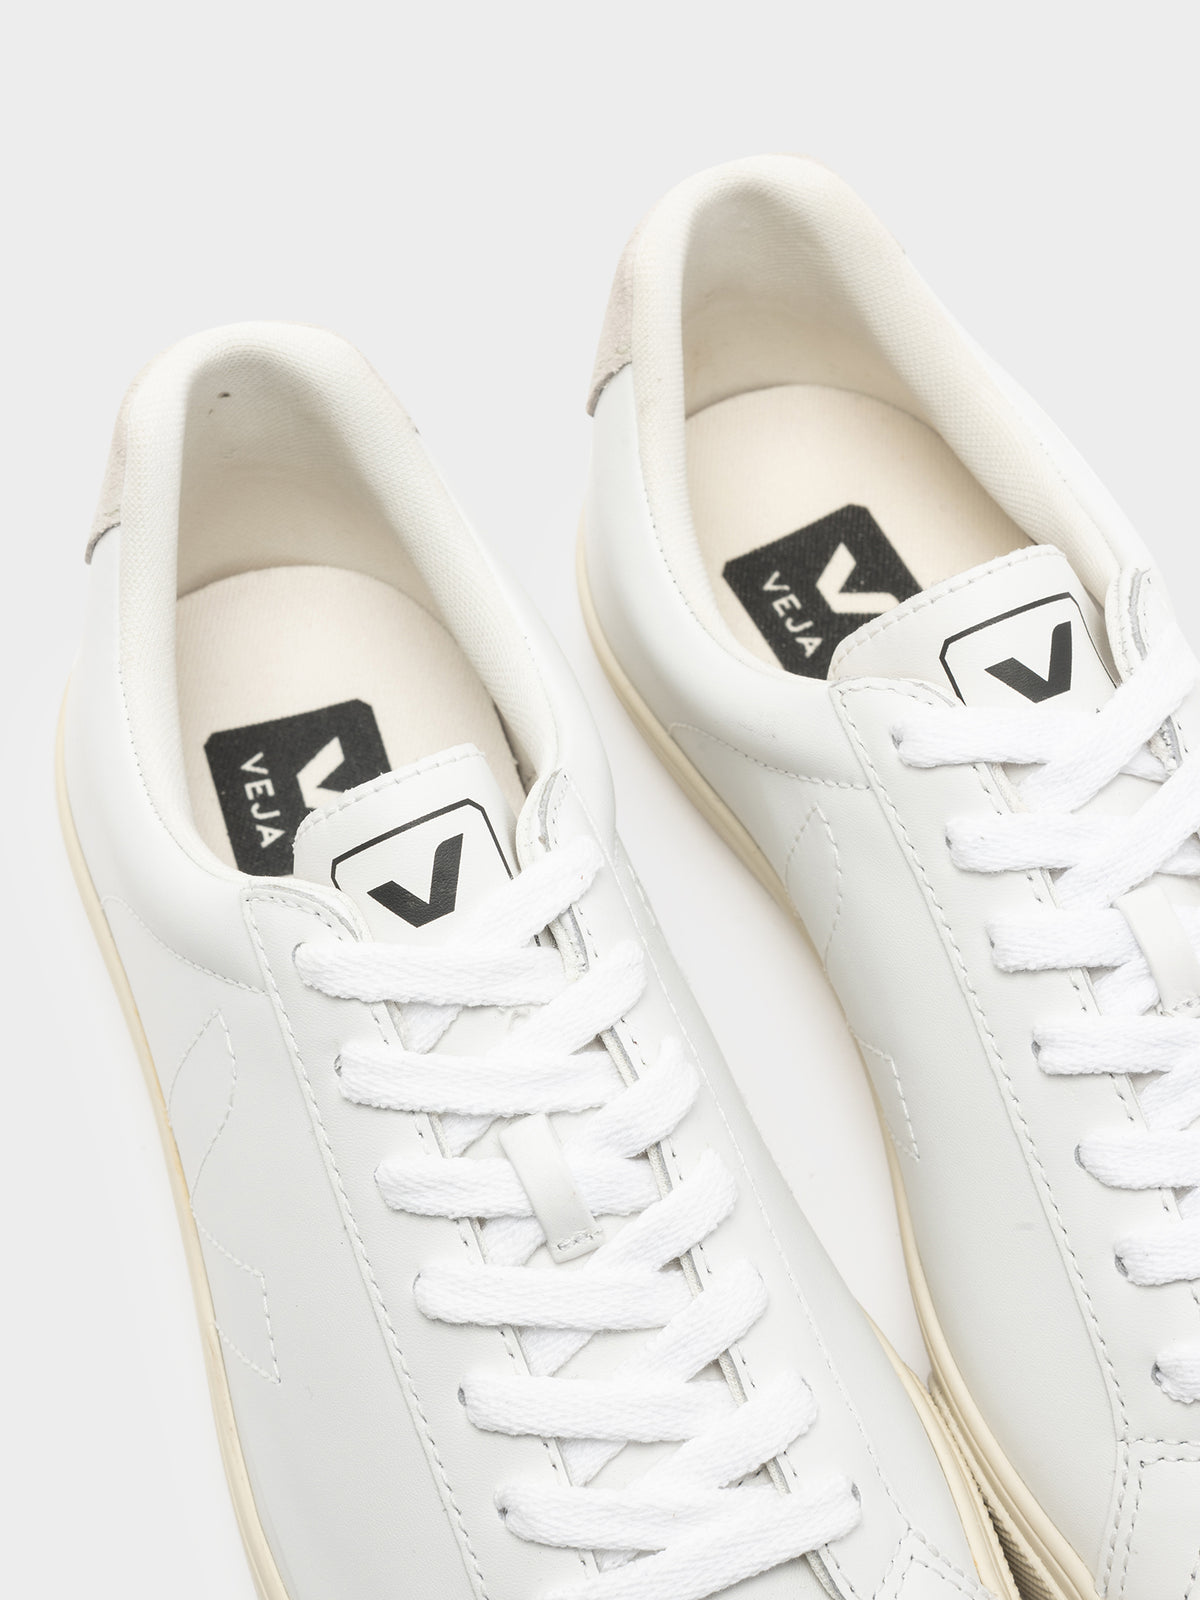 Unisex Esplar Leather Sneaker in Extra White